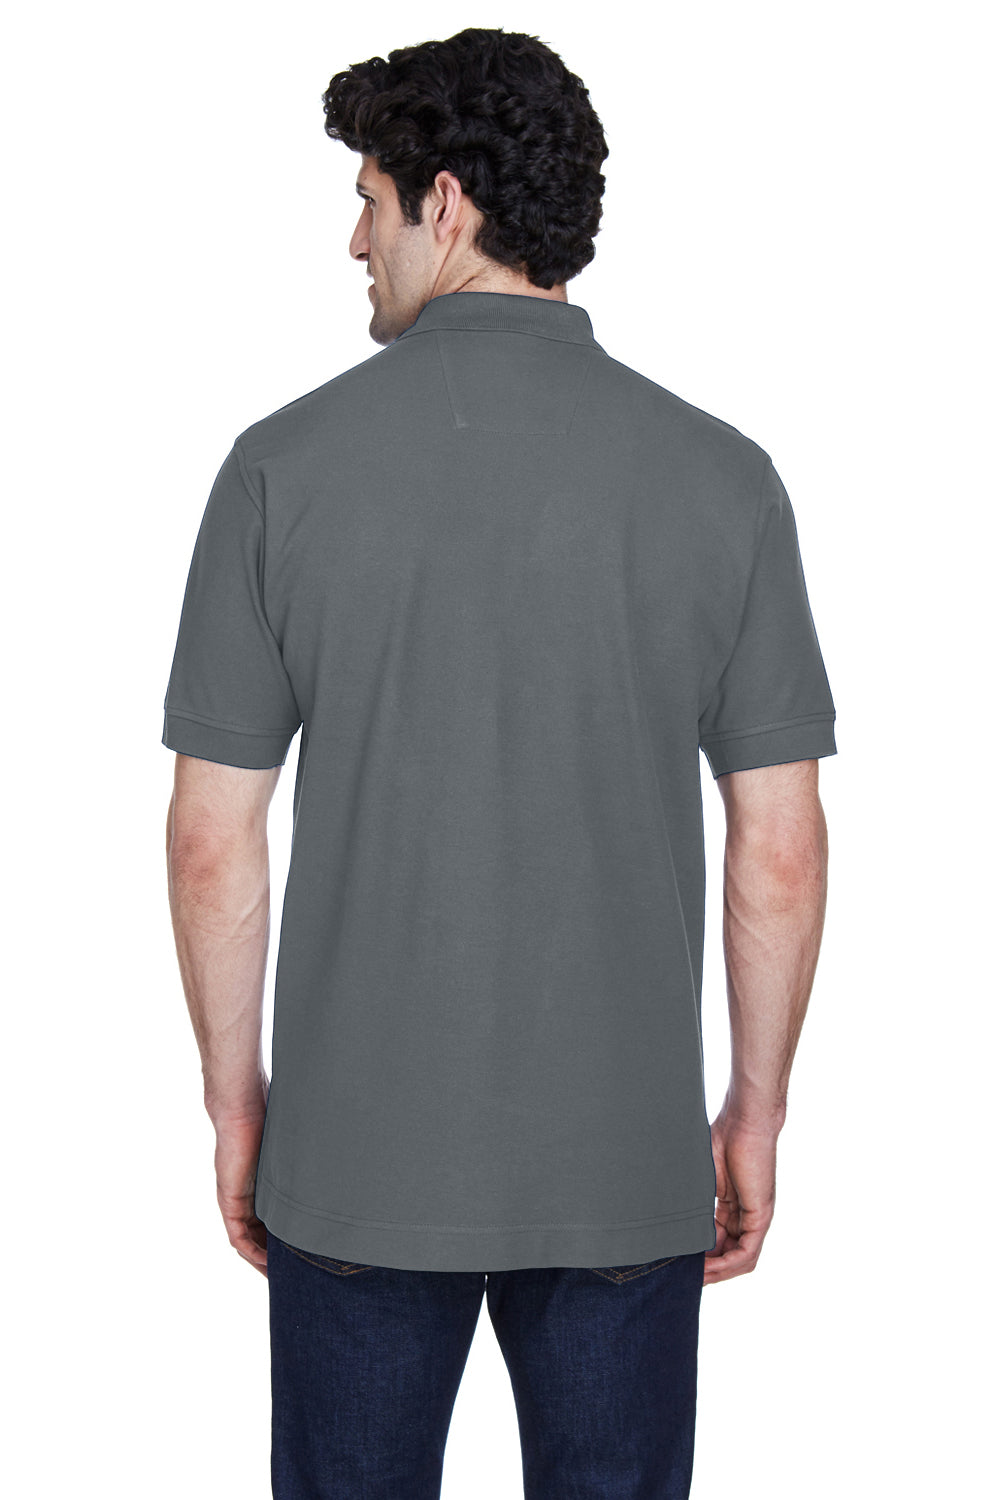 Devon & Jones D100 Mens Short Sleeve Polo Shirt Graphite Grey Back